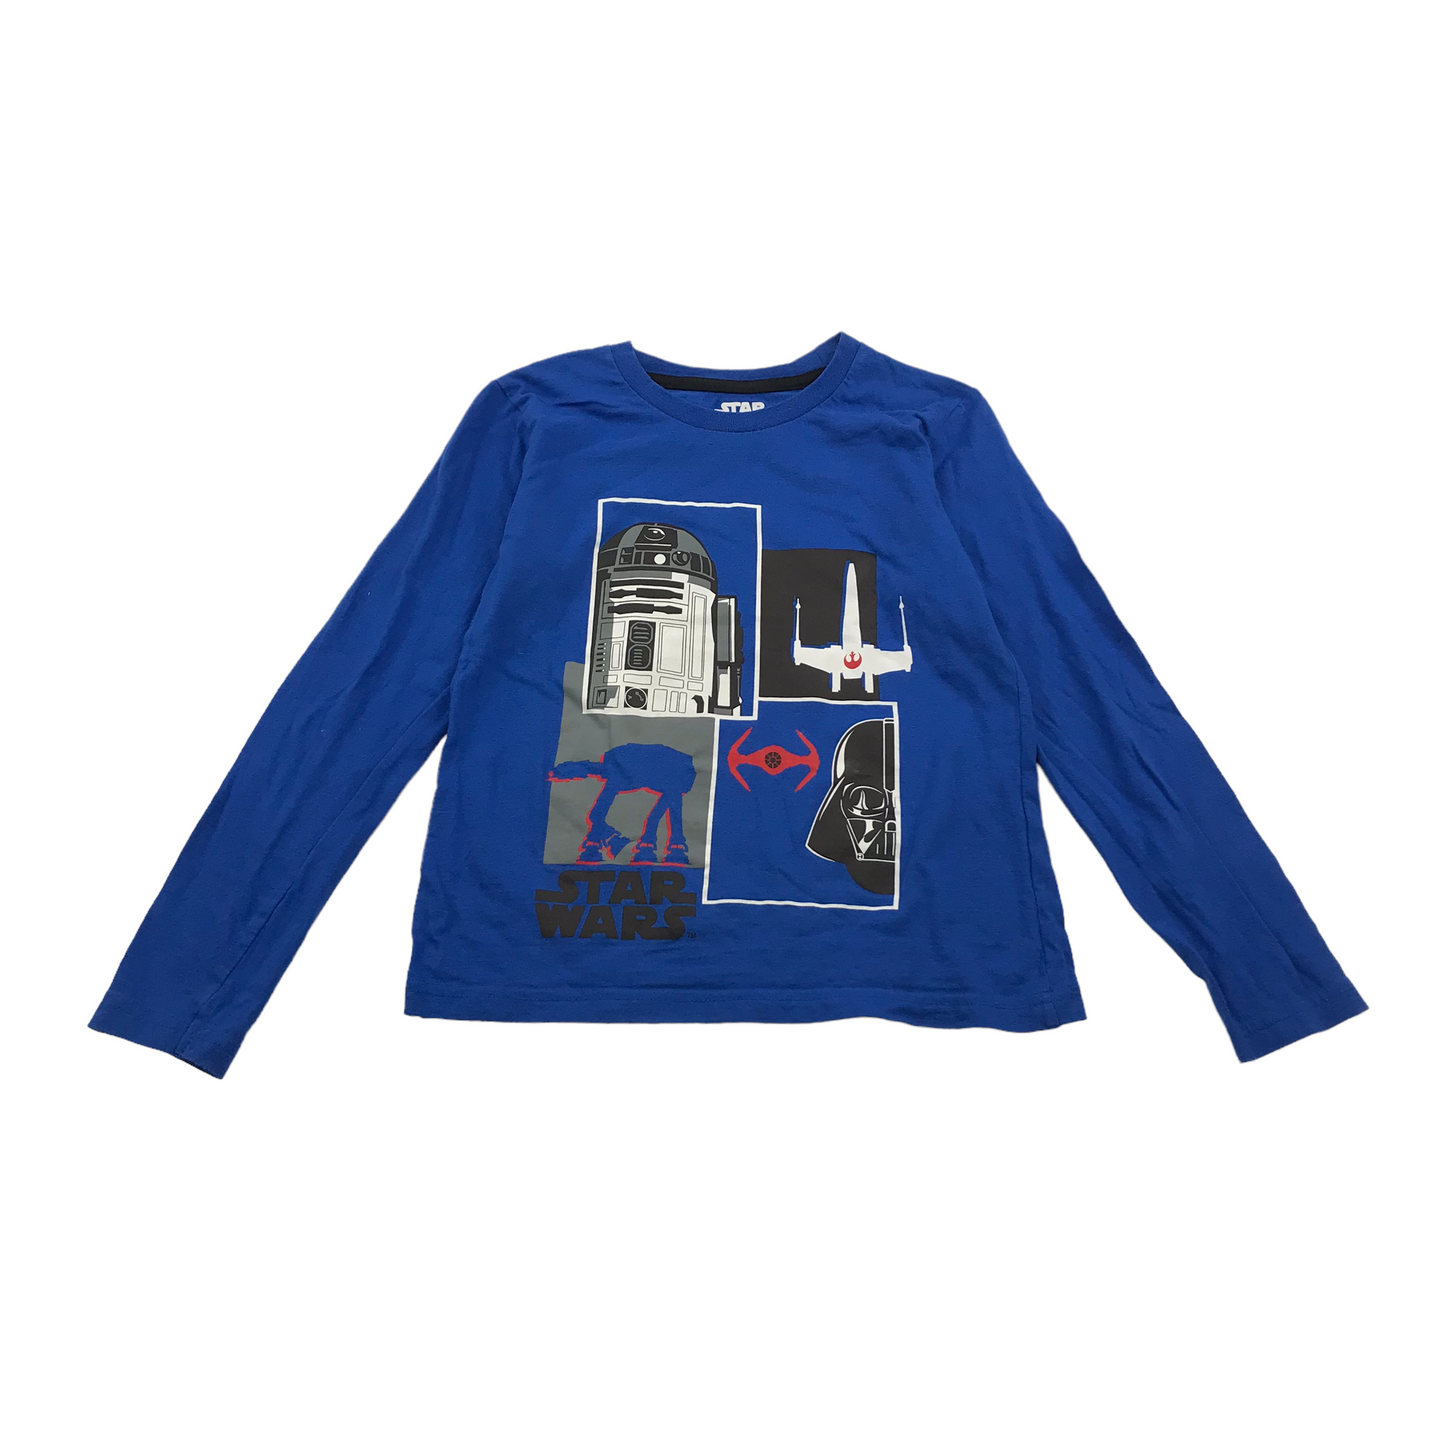 Royal Blue Star Wars Long Sleeve T-shirt Age 7